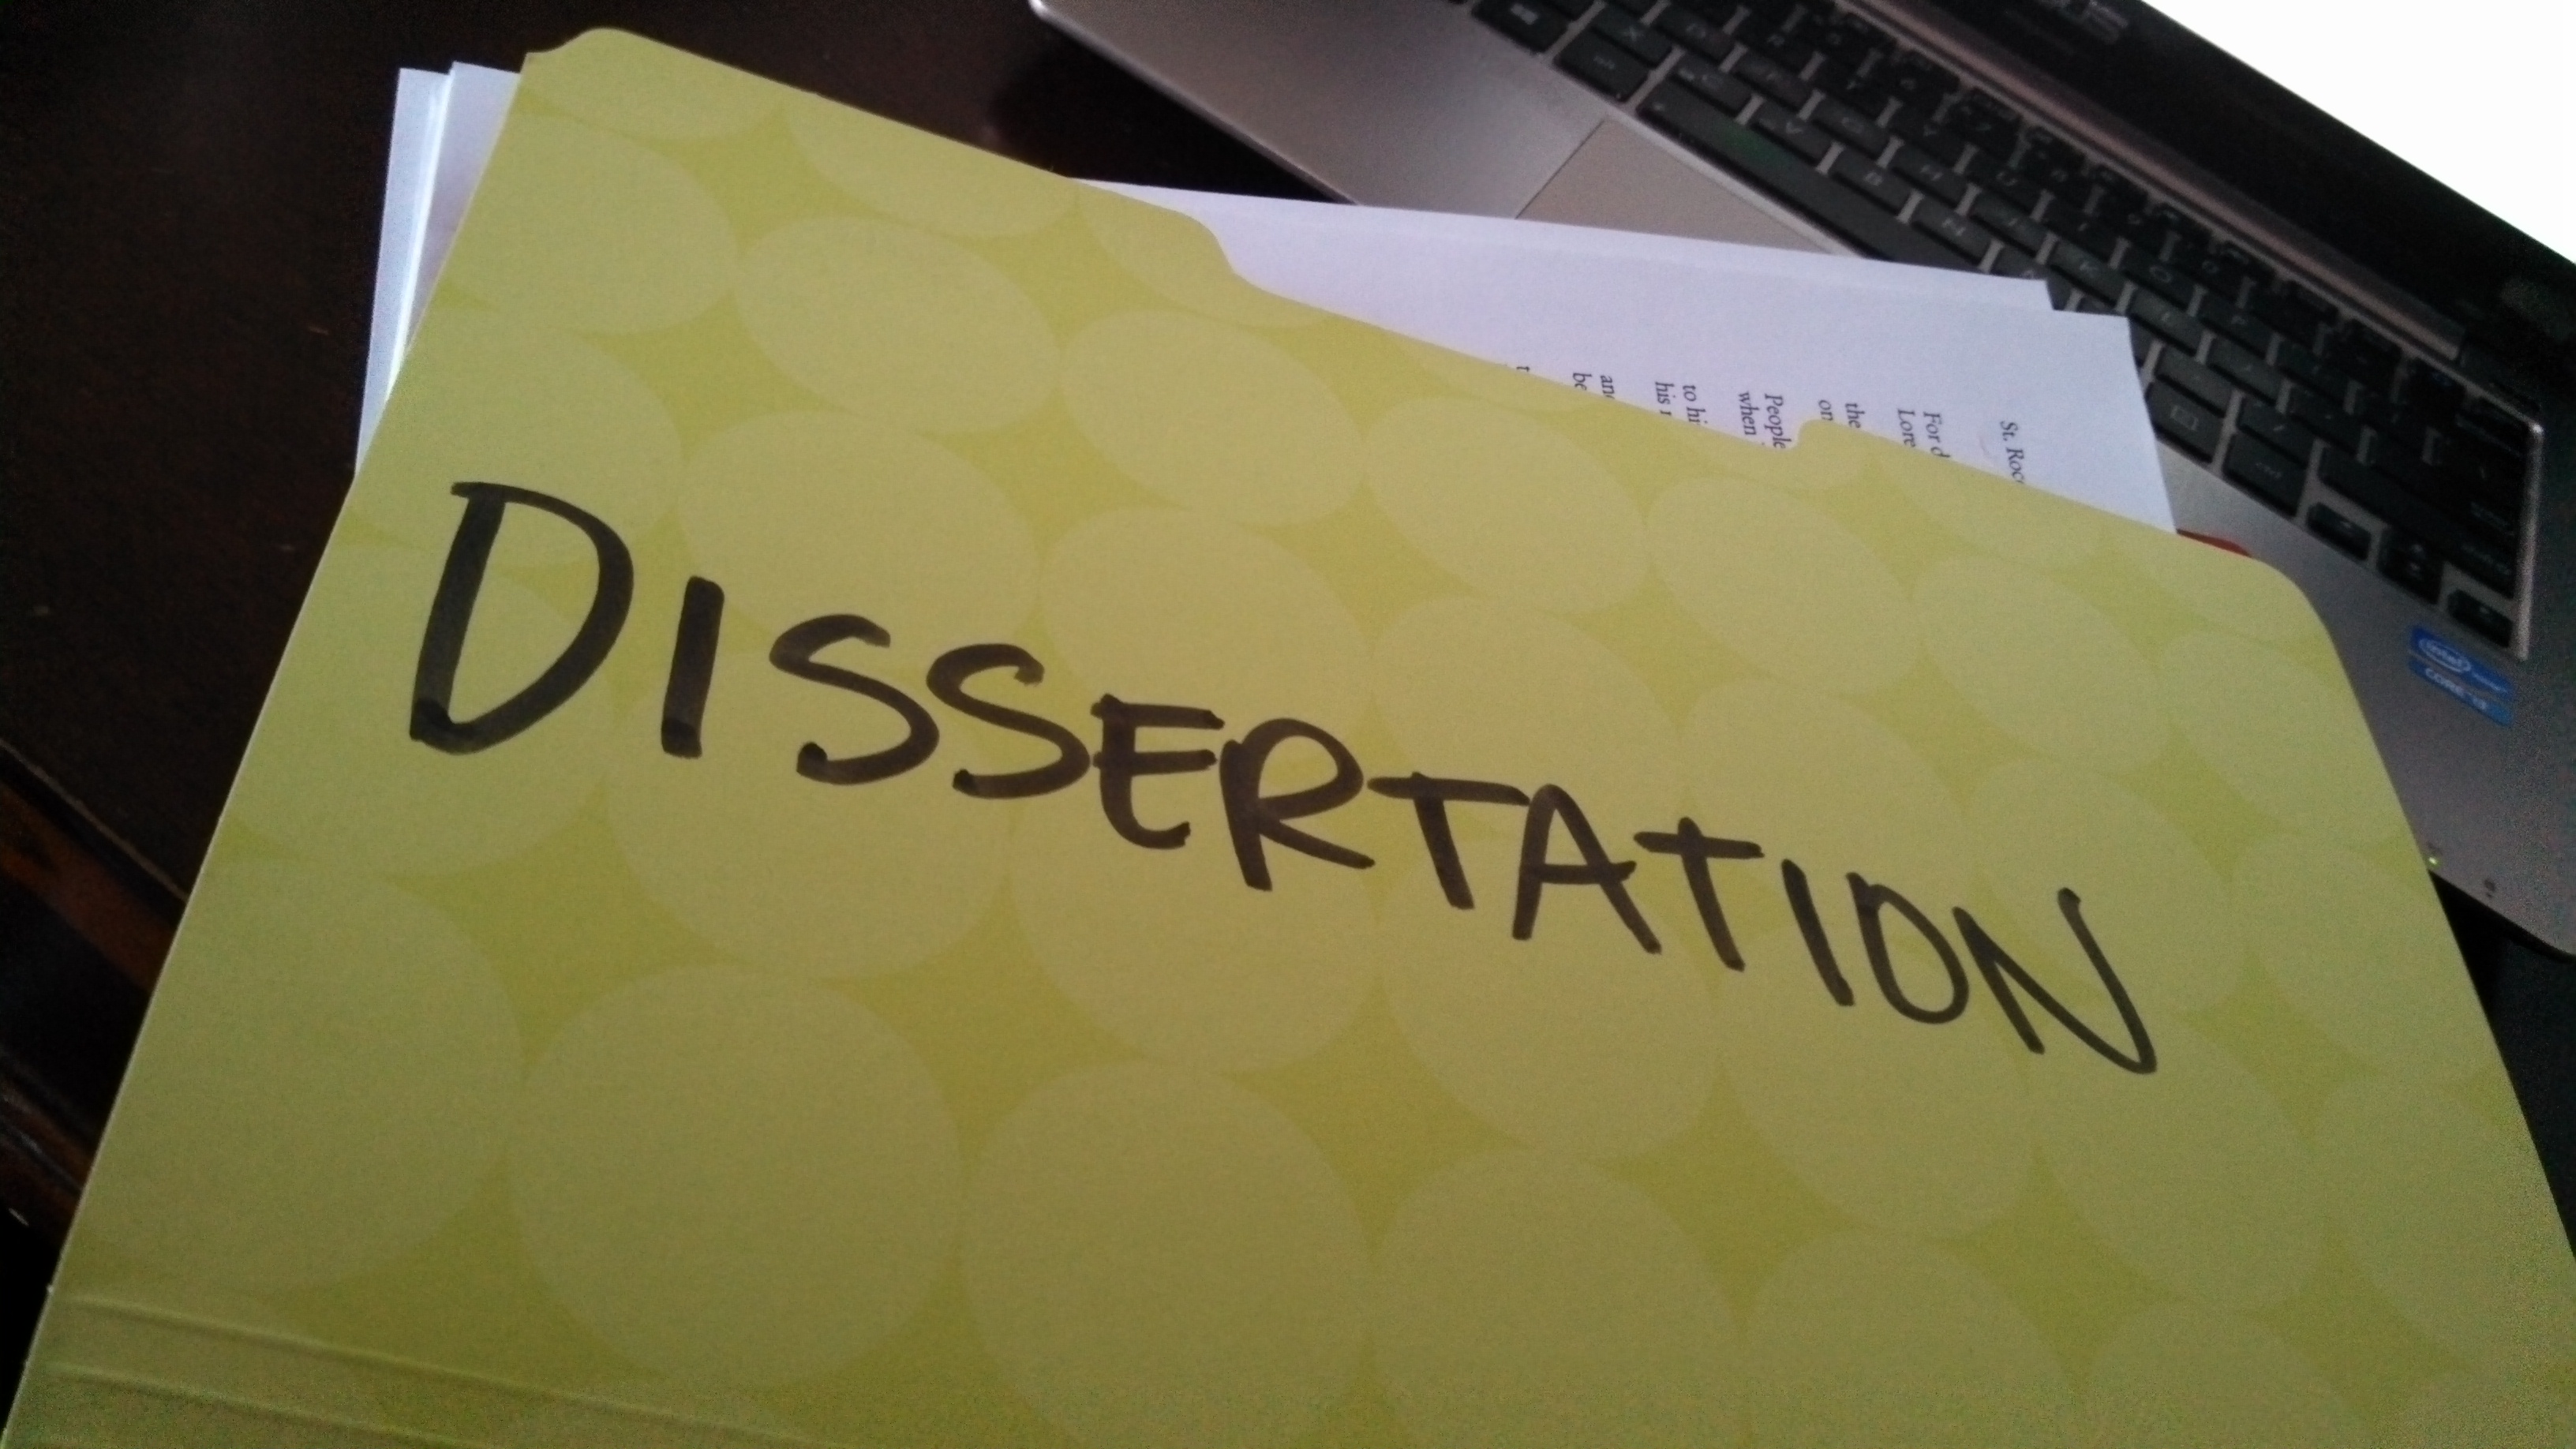 Phd thesis vs dissertation